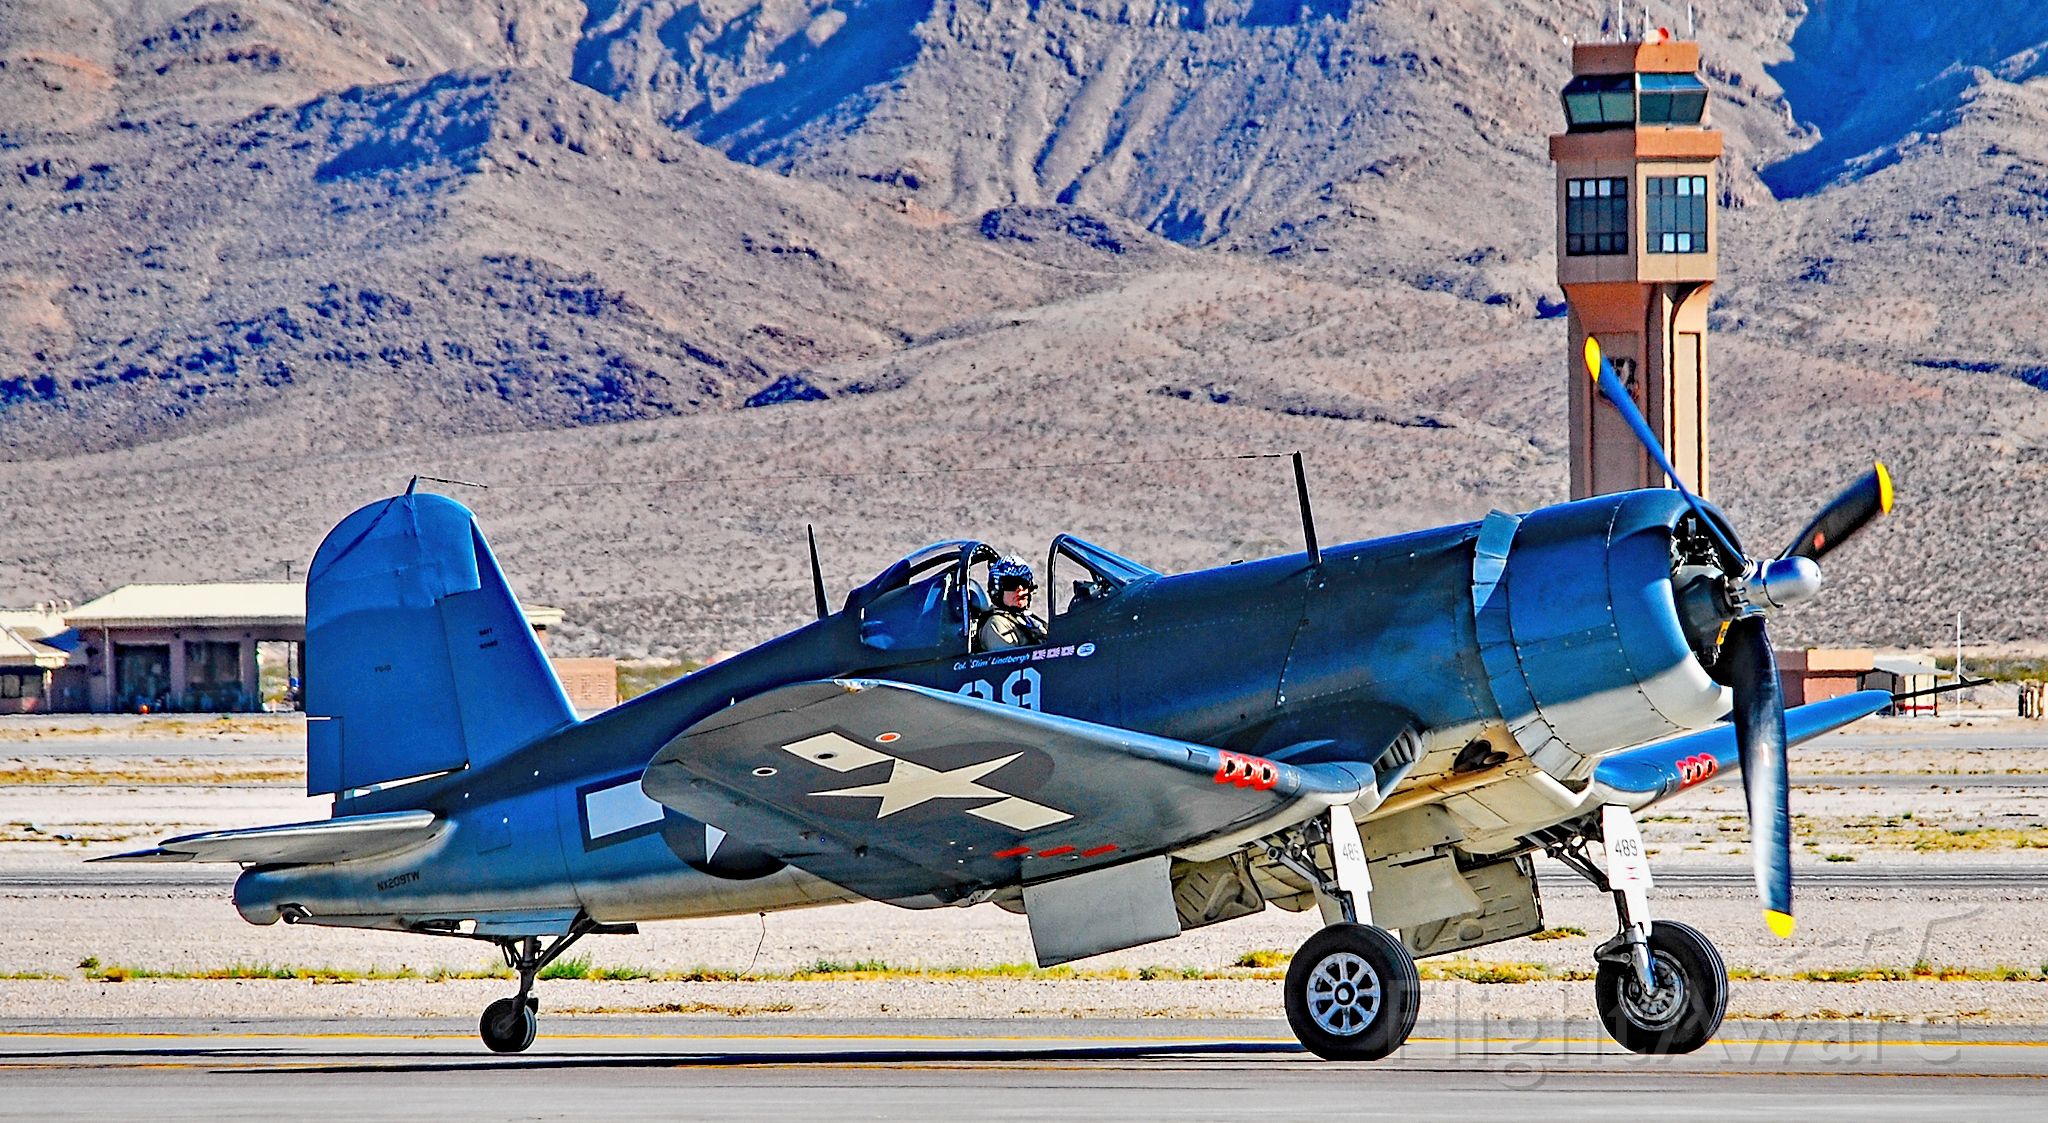 VOUGHT-SIKORSKY V-166 Corsair (N209TW) - N209TW 1945 Goodyear FG-1D Corsair s/n 92489 - Aviation Nation 2017br /Las Vegas - Nellis AFB (LSV / KLSV)br /USA - Nevada, November 11, 2017br /Photo: TDelCoro